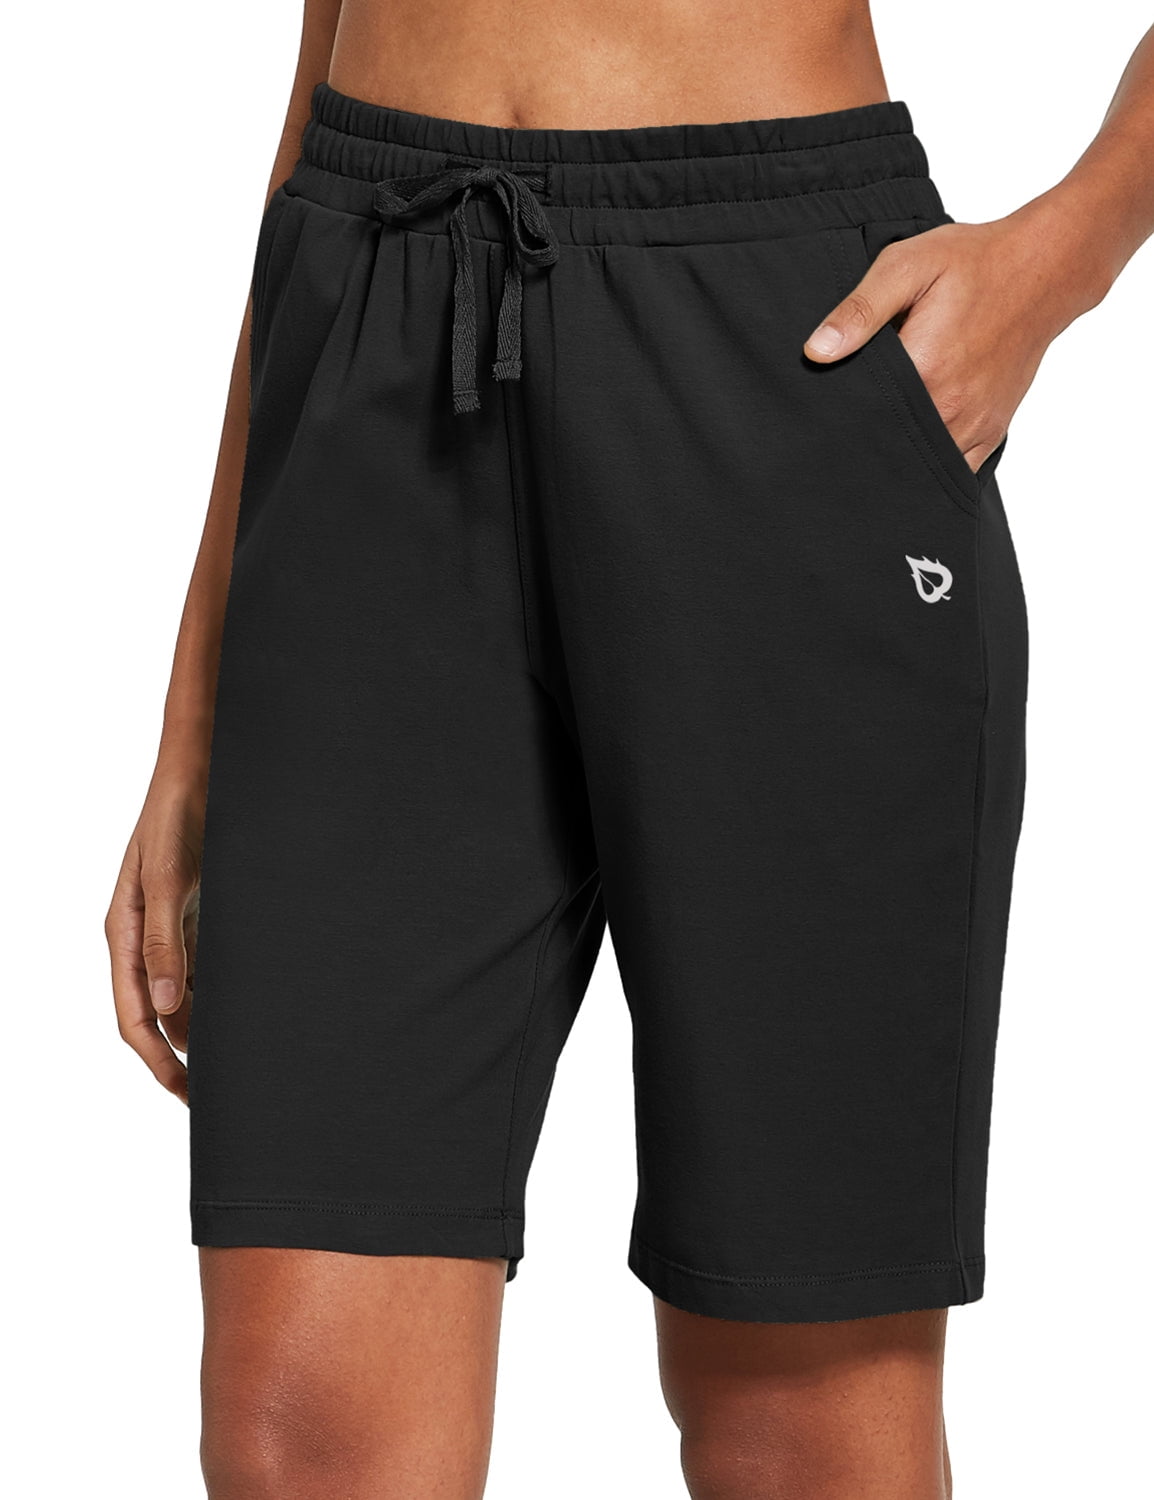 BALEAF Bermuda Shorts For Women Running Basketball Shorts With Pockets ...